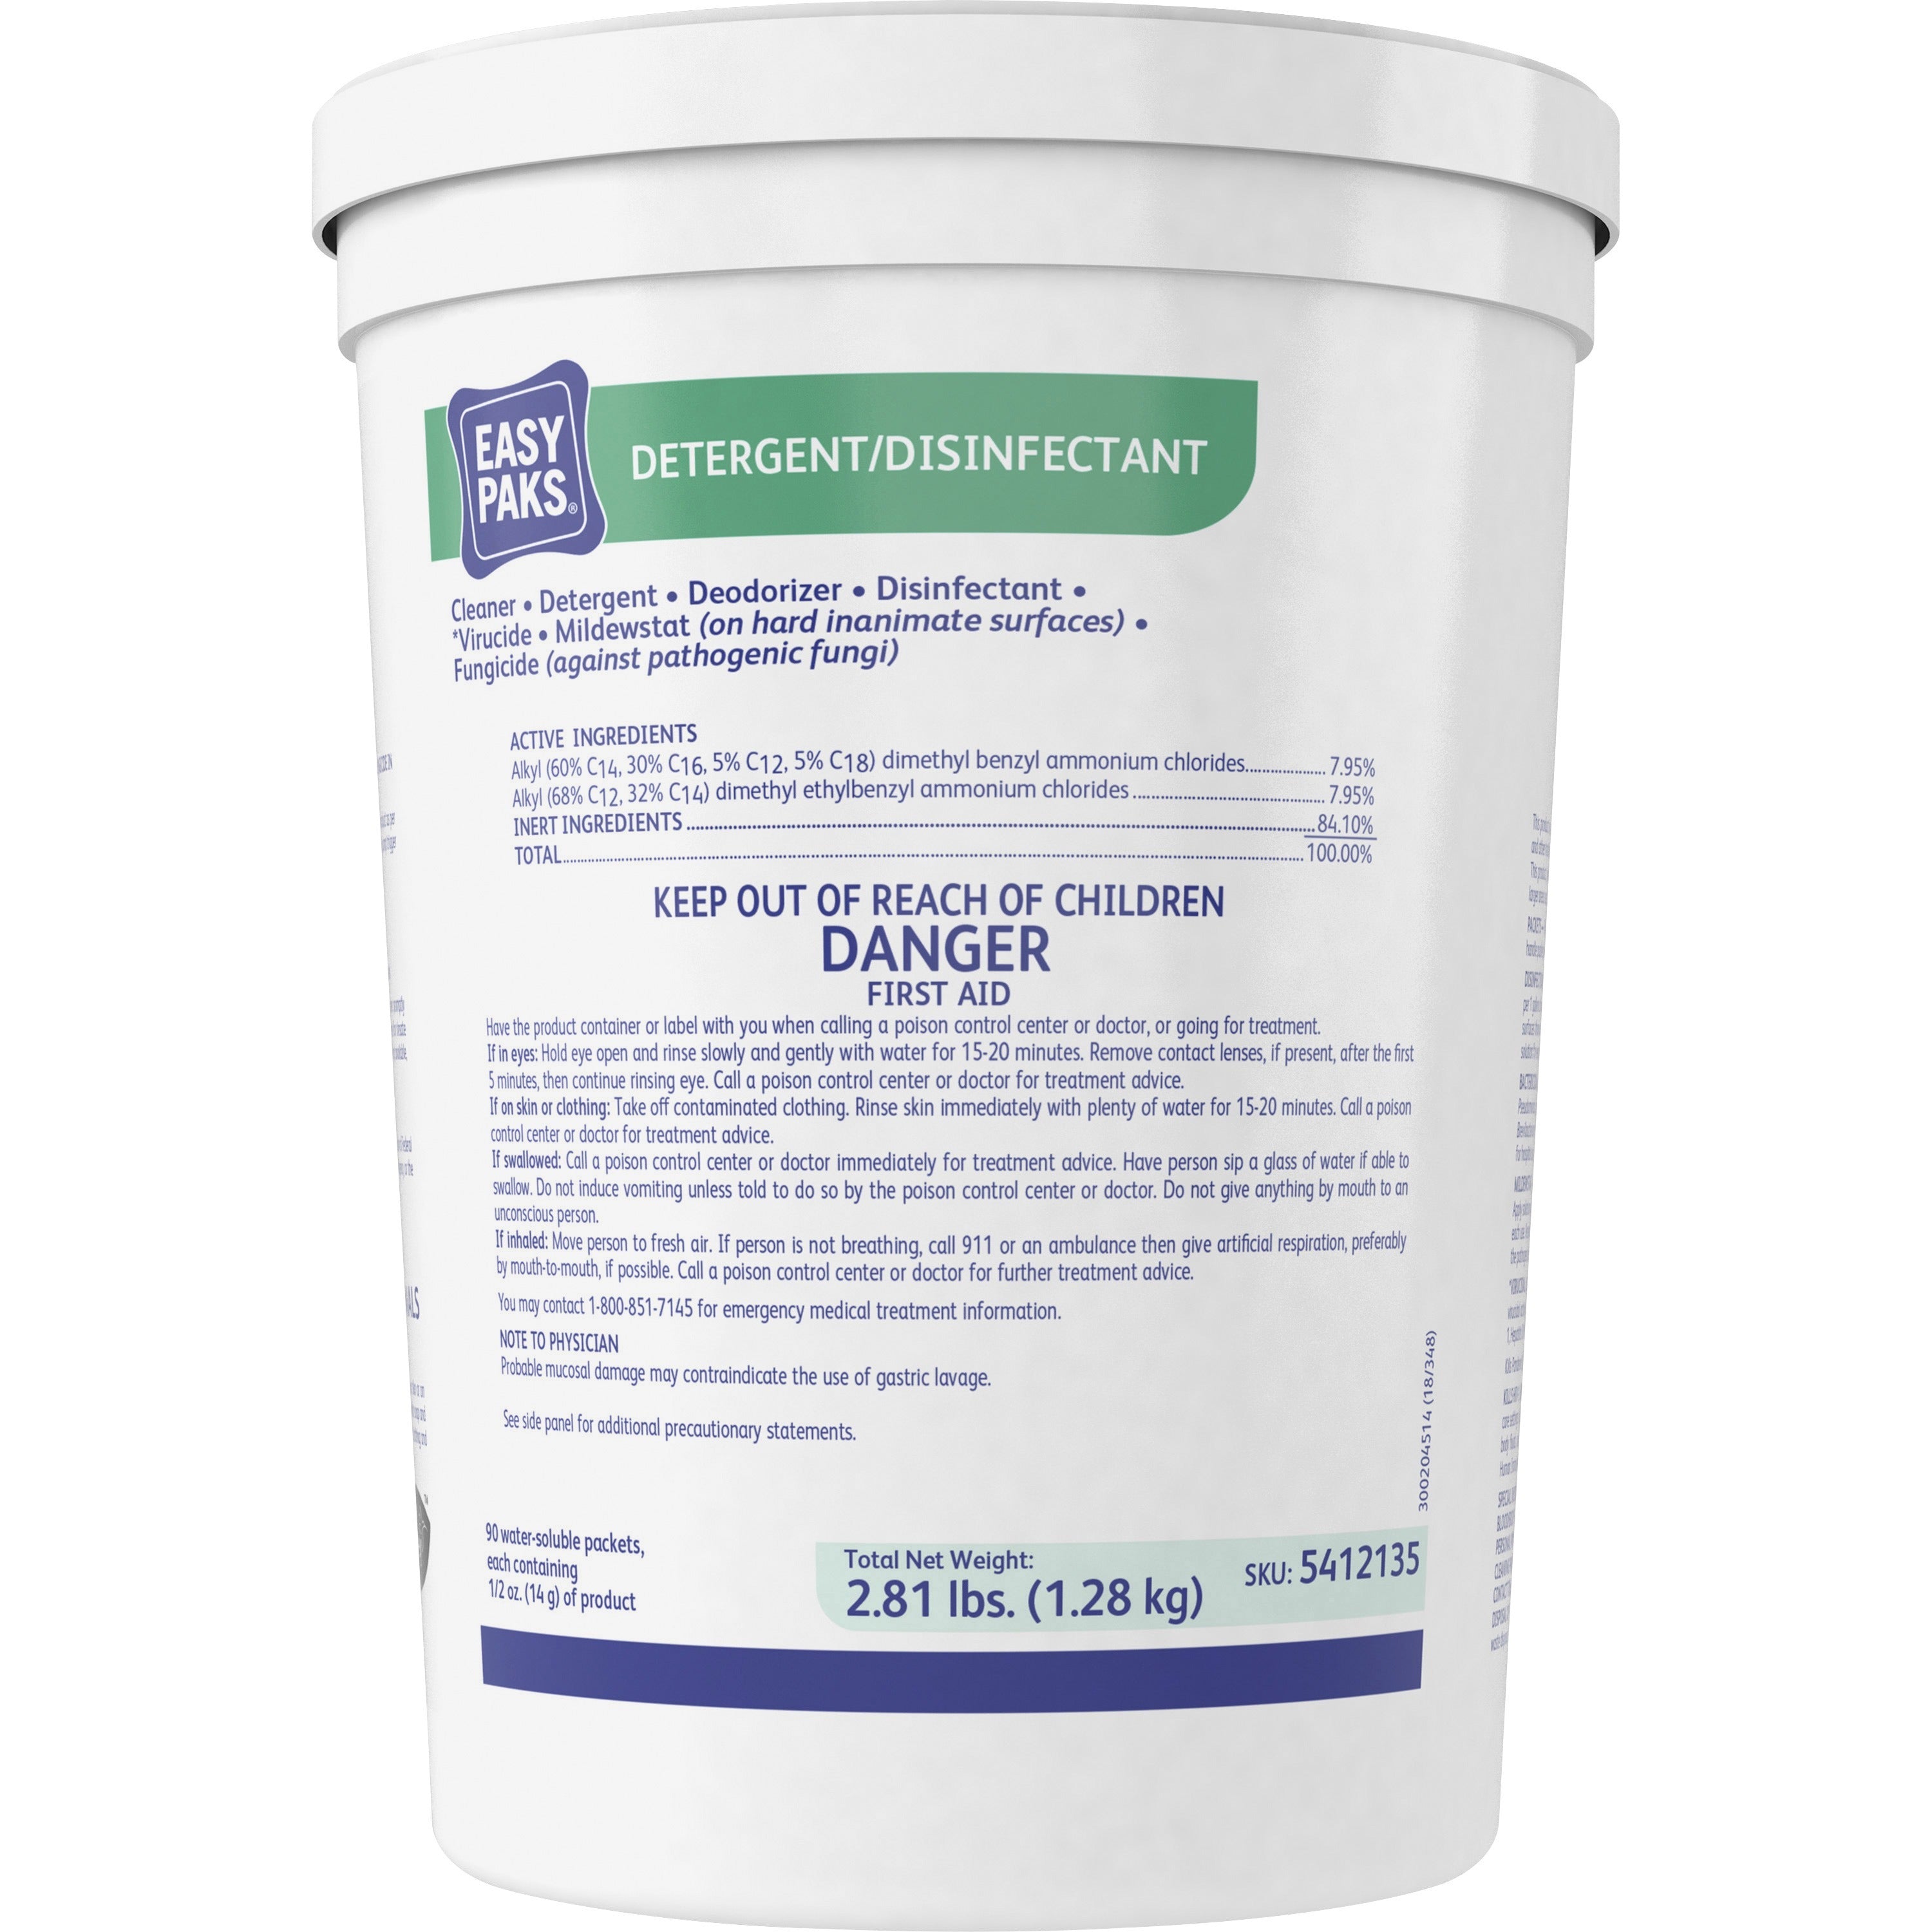 diversey-easypaks-detergent-disinfectant-concentrate-050-oz-003-lb-lemon-scent-90-tub-2-carton-disinfectant-deodorize-green_dvo5412135ct - 2